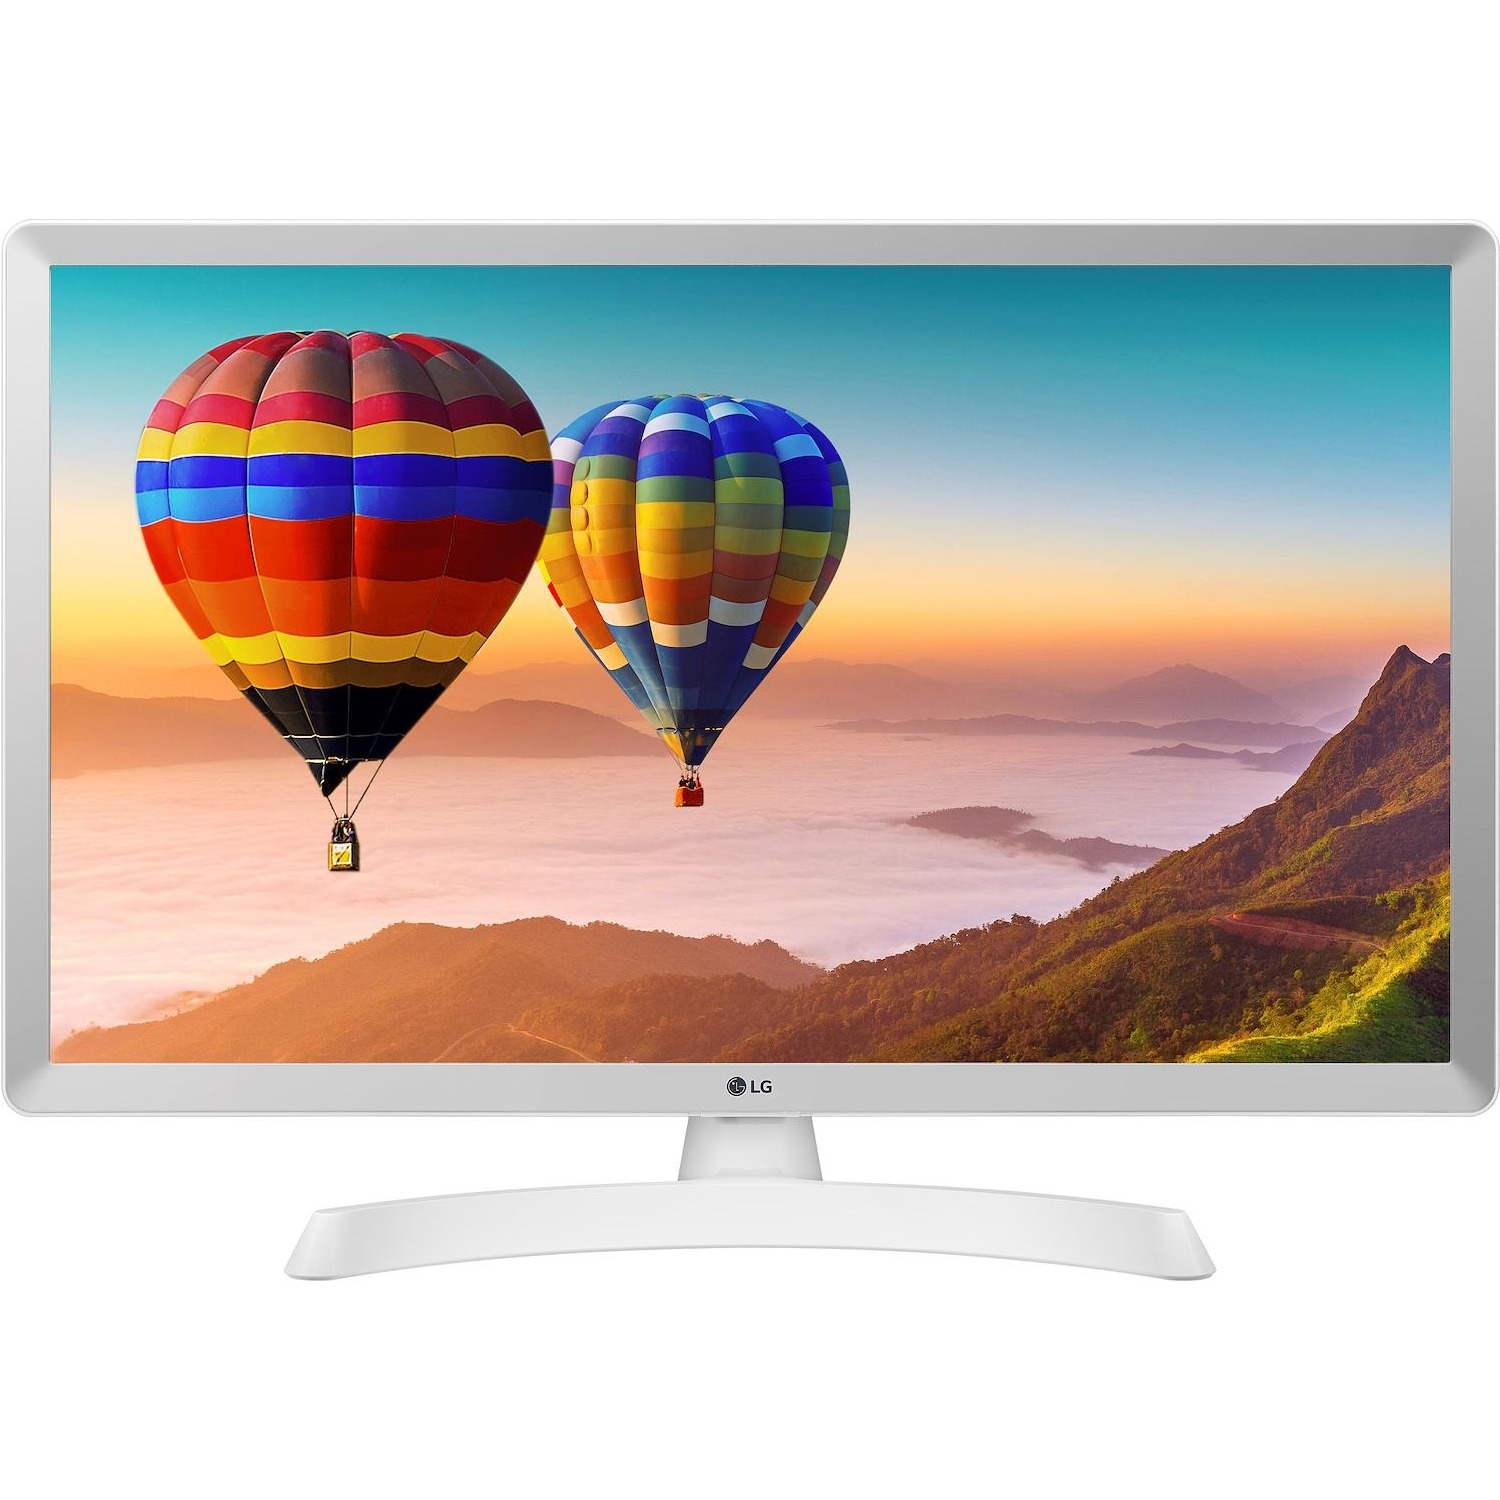 Immagine per TV LED Monitor LG 28TN515VW bianco da DIMOStore